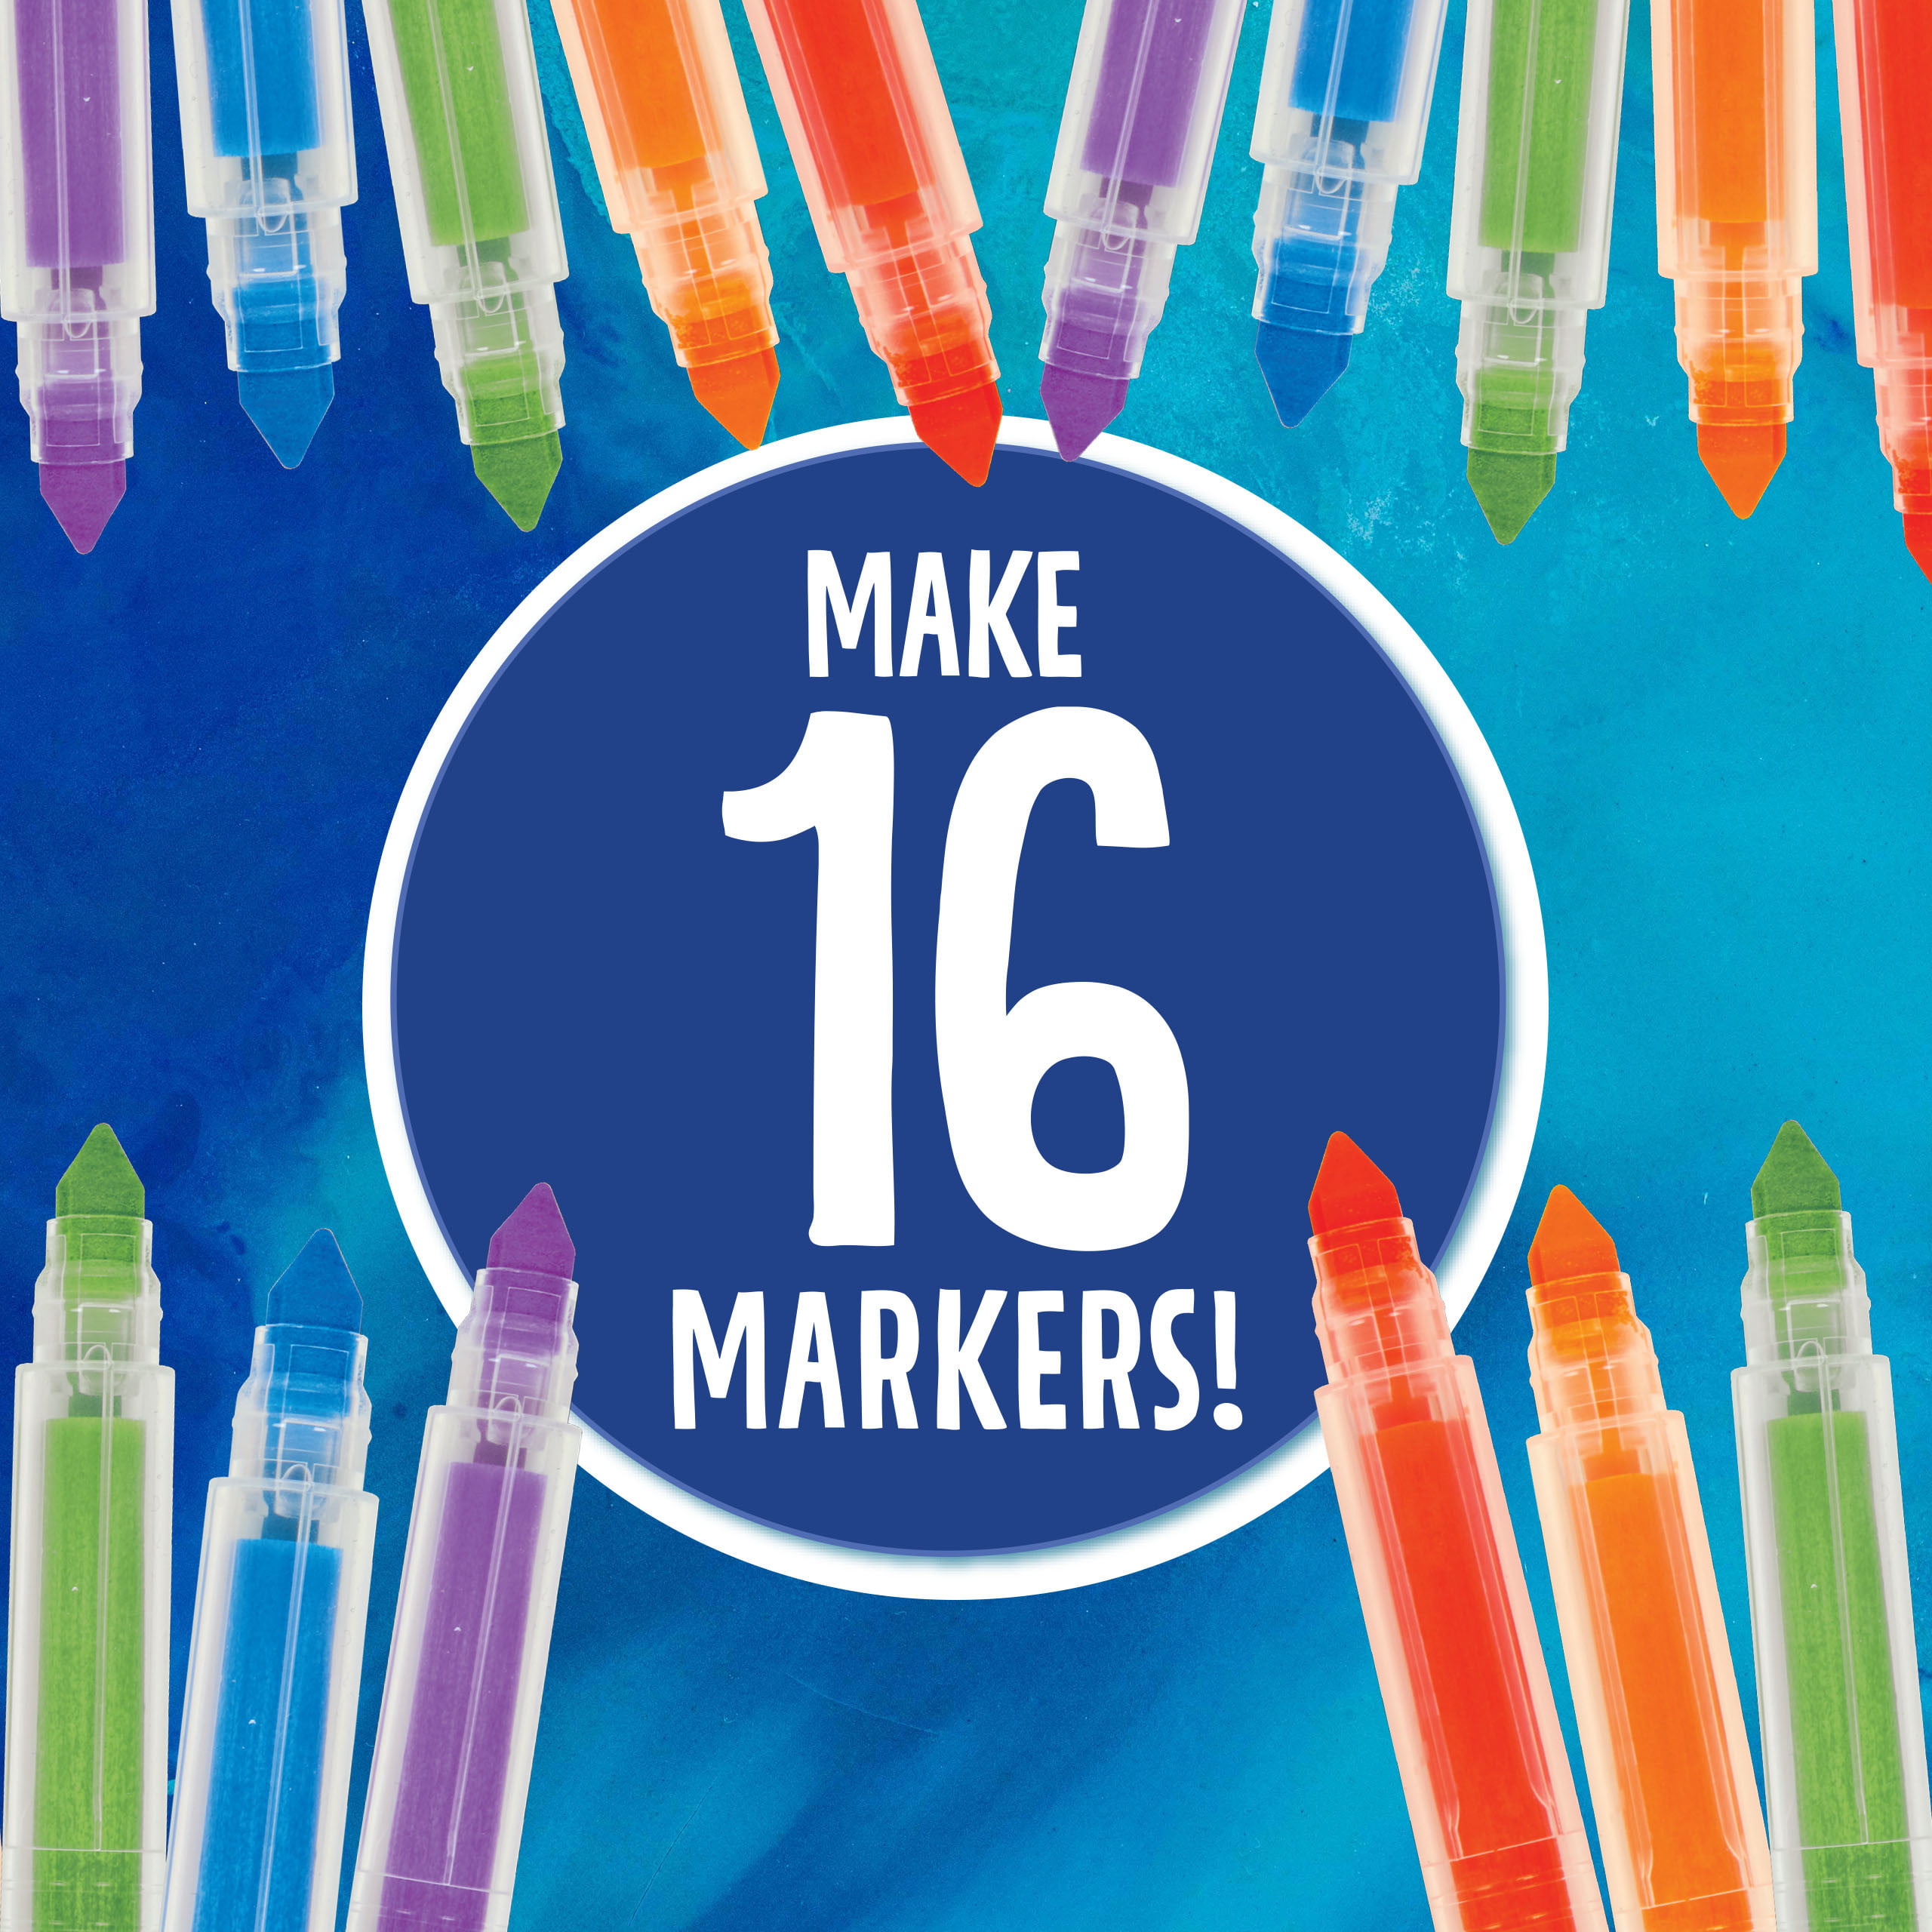 Crayola® Marker Maker Demo 